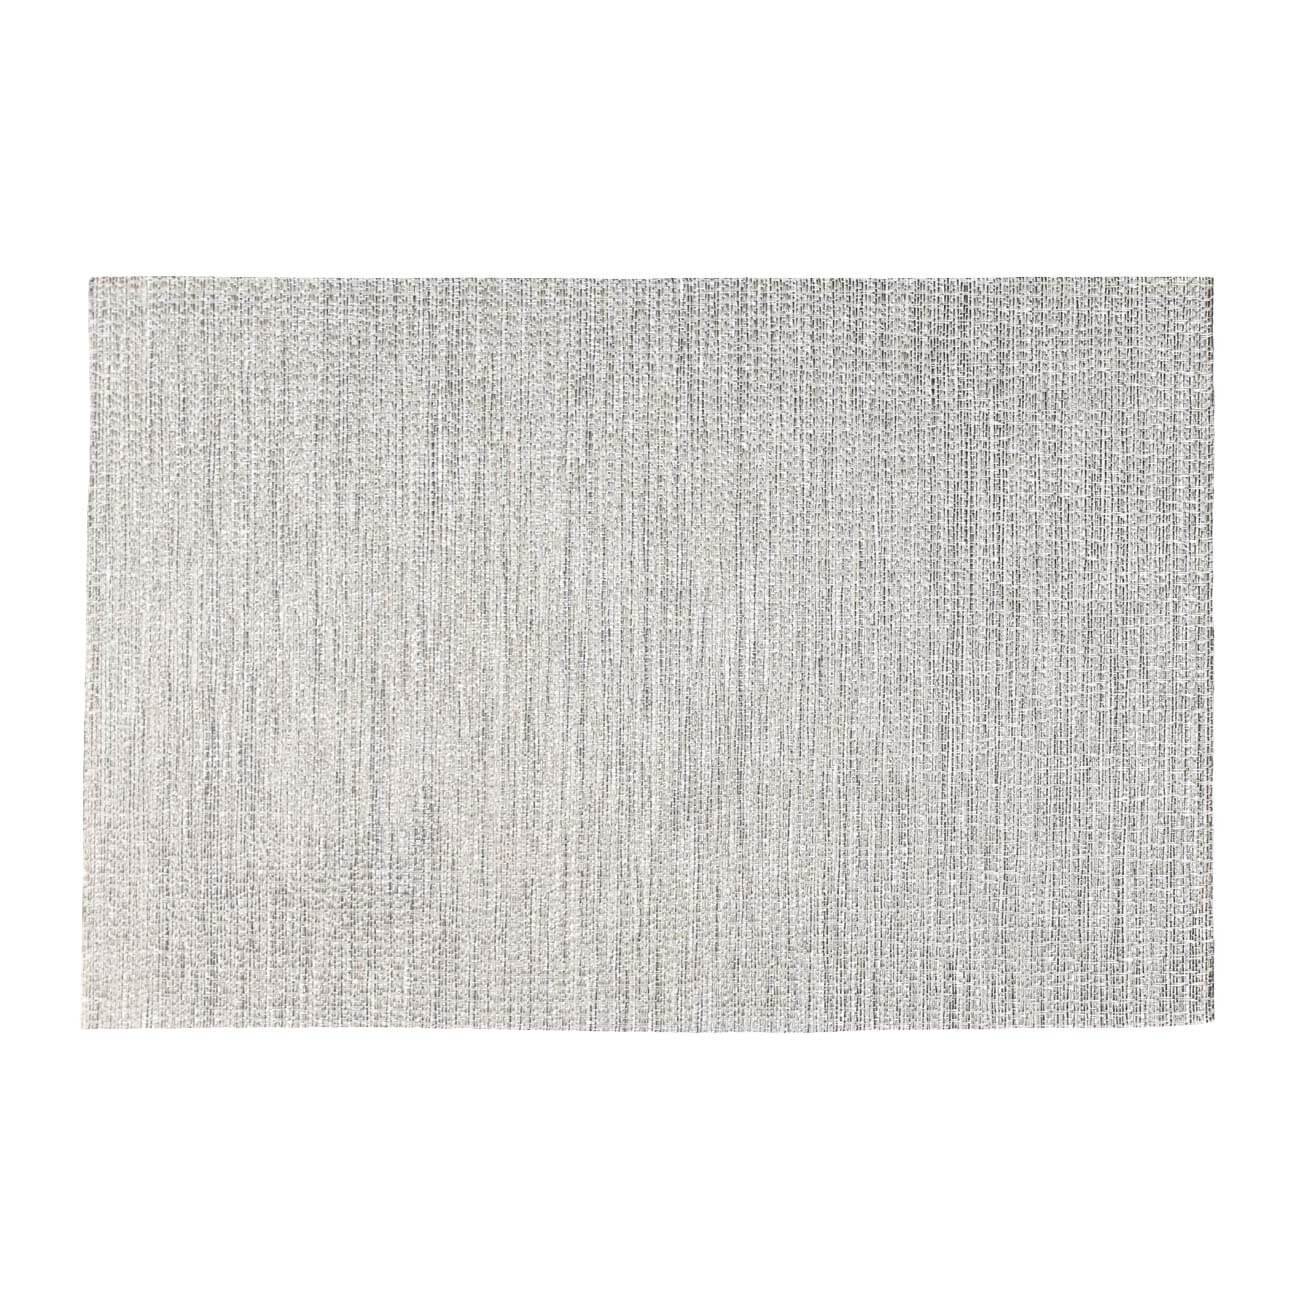 Napkin for appliances, 30x45 cm, PVC, rectangular, gray-beige, Solid изображение № 1